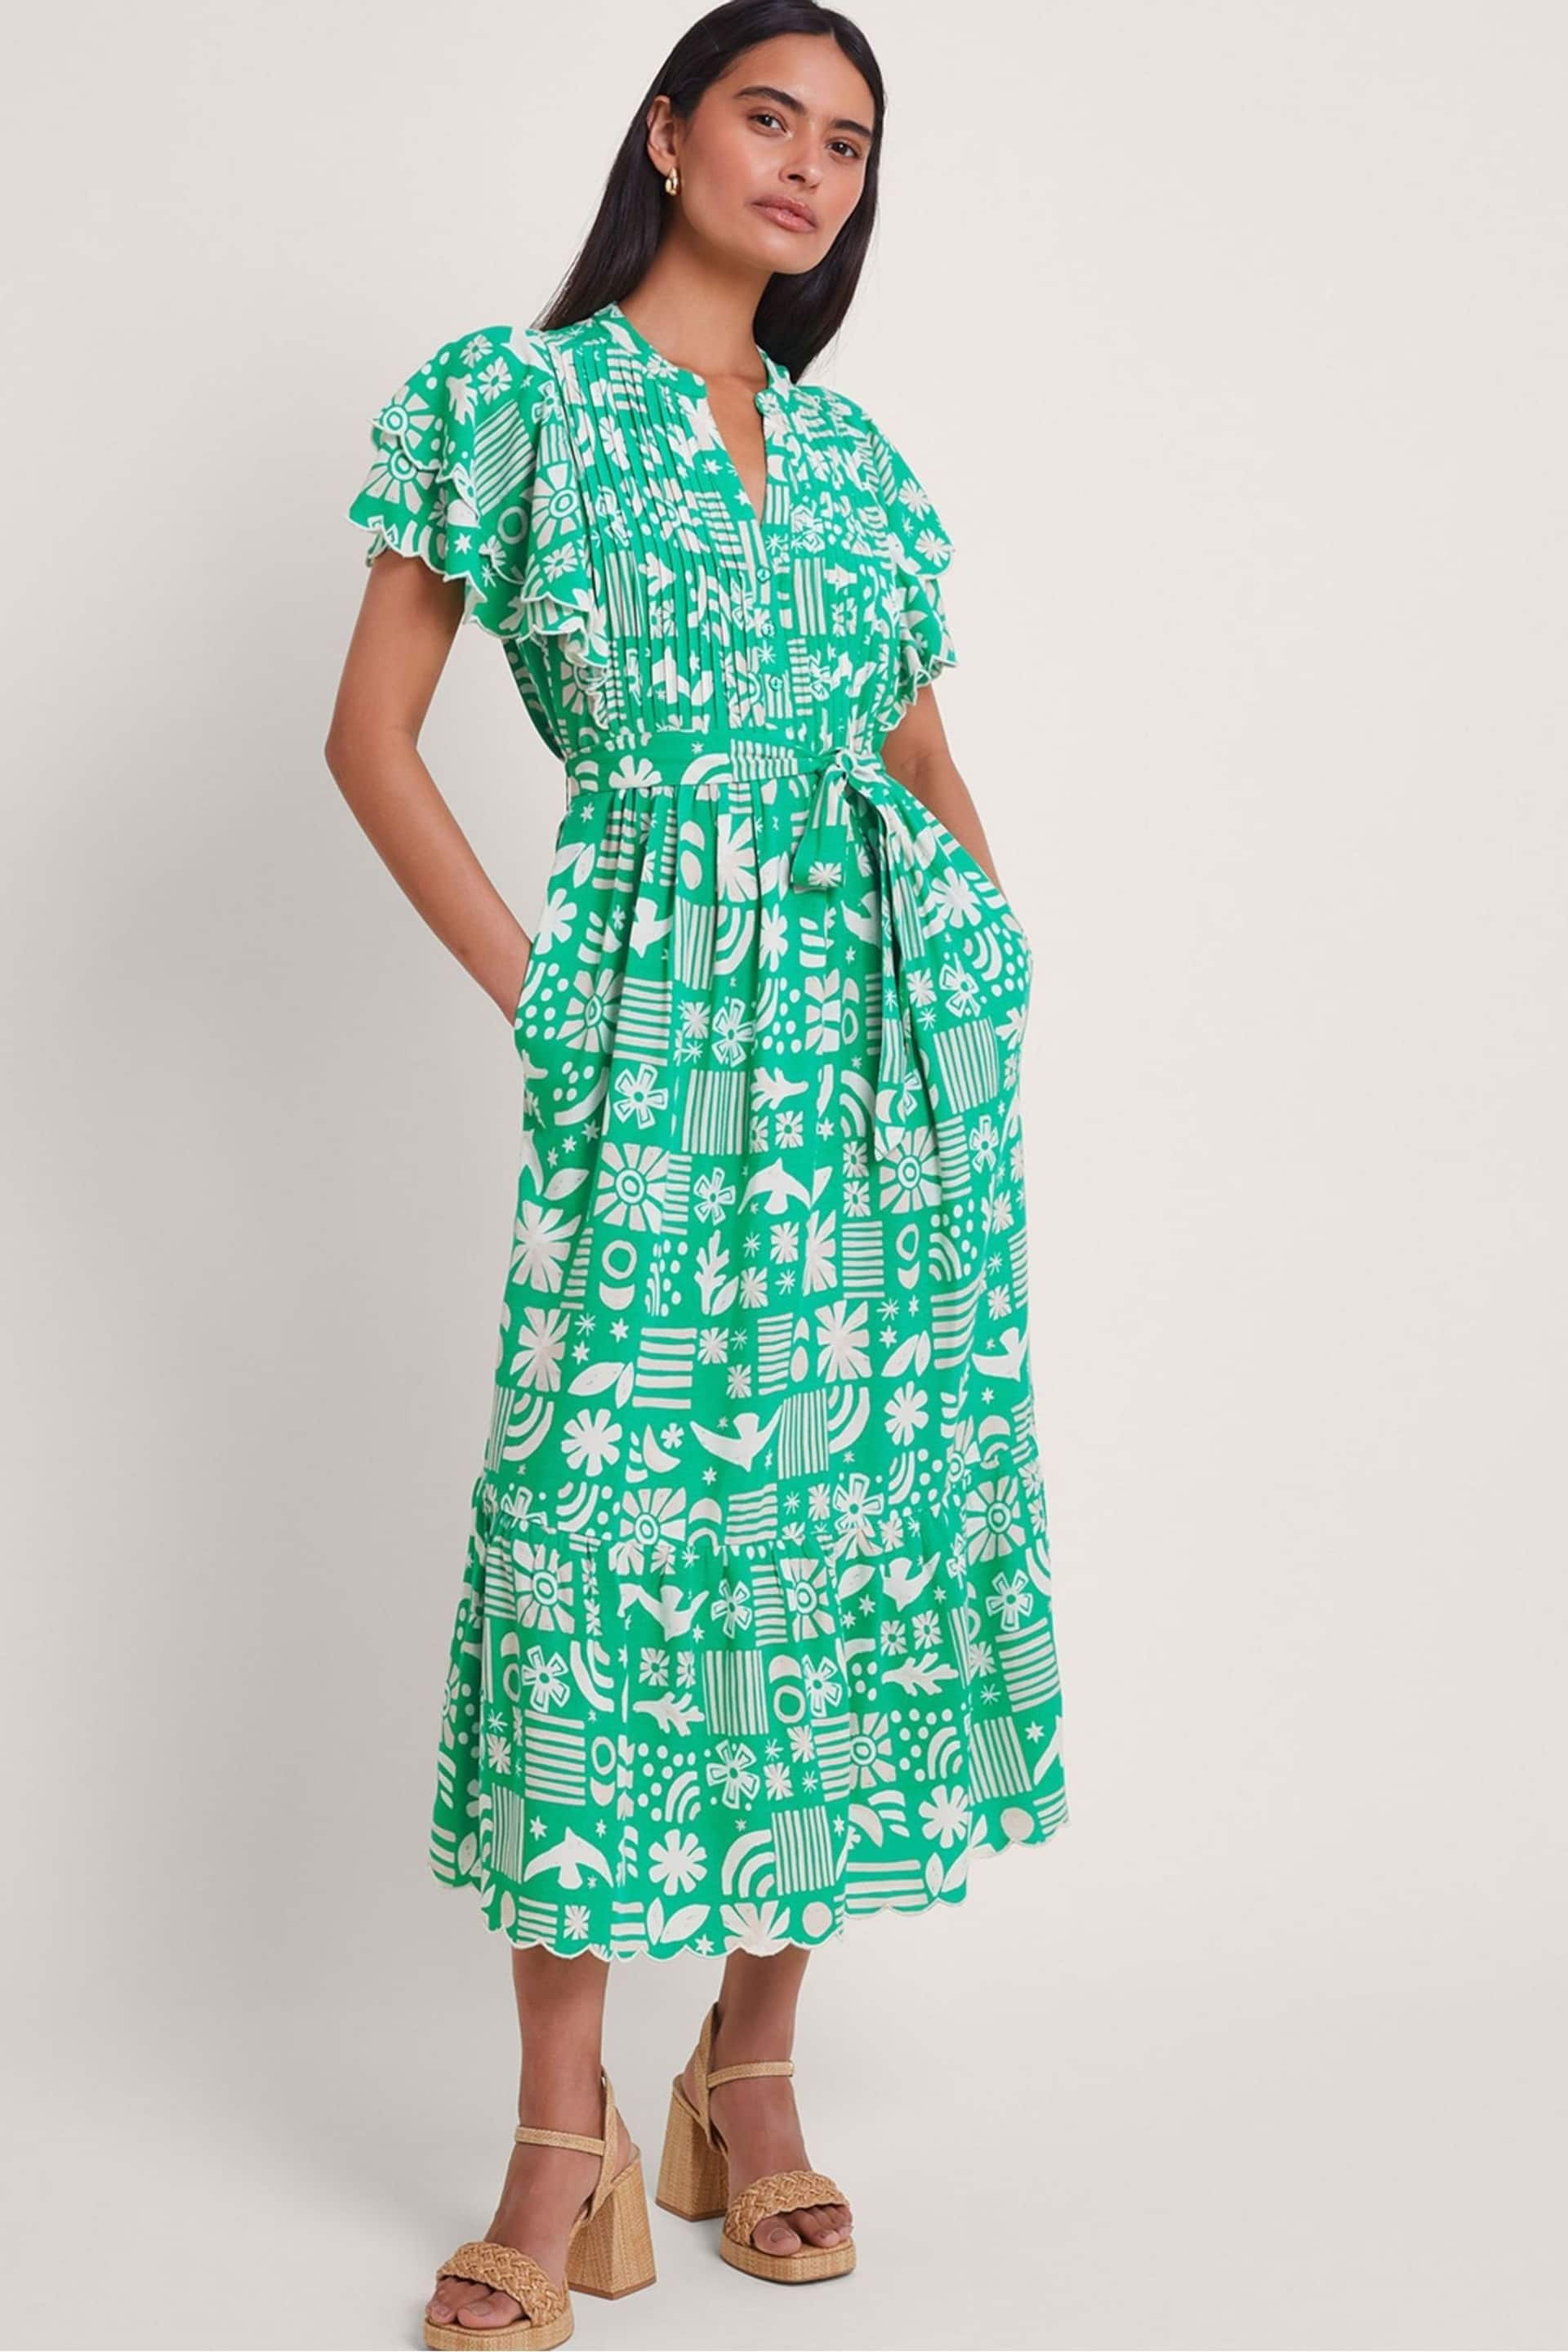 Monsoon Green Dario Print Dress - Image 1 of 5